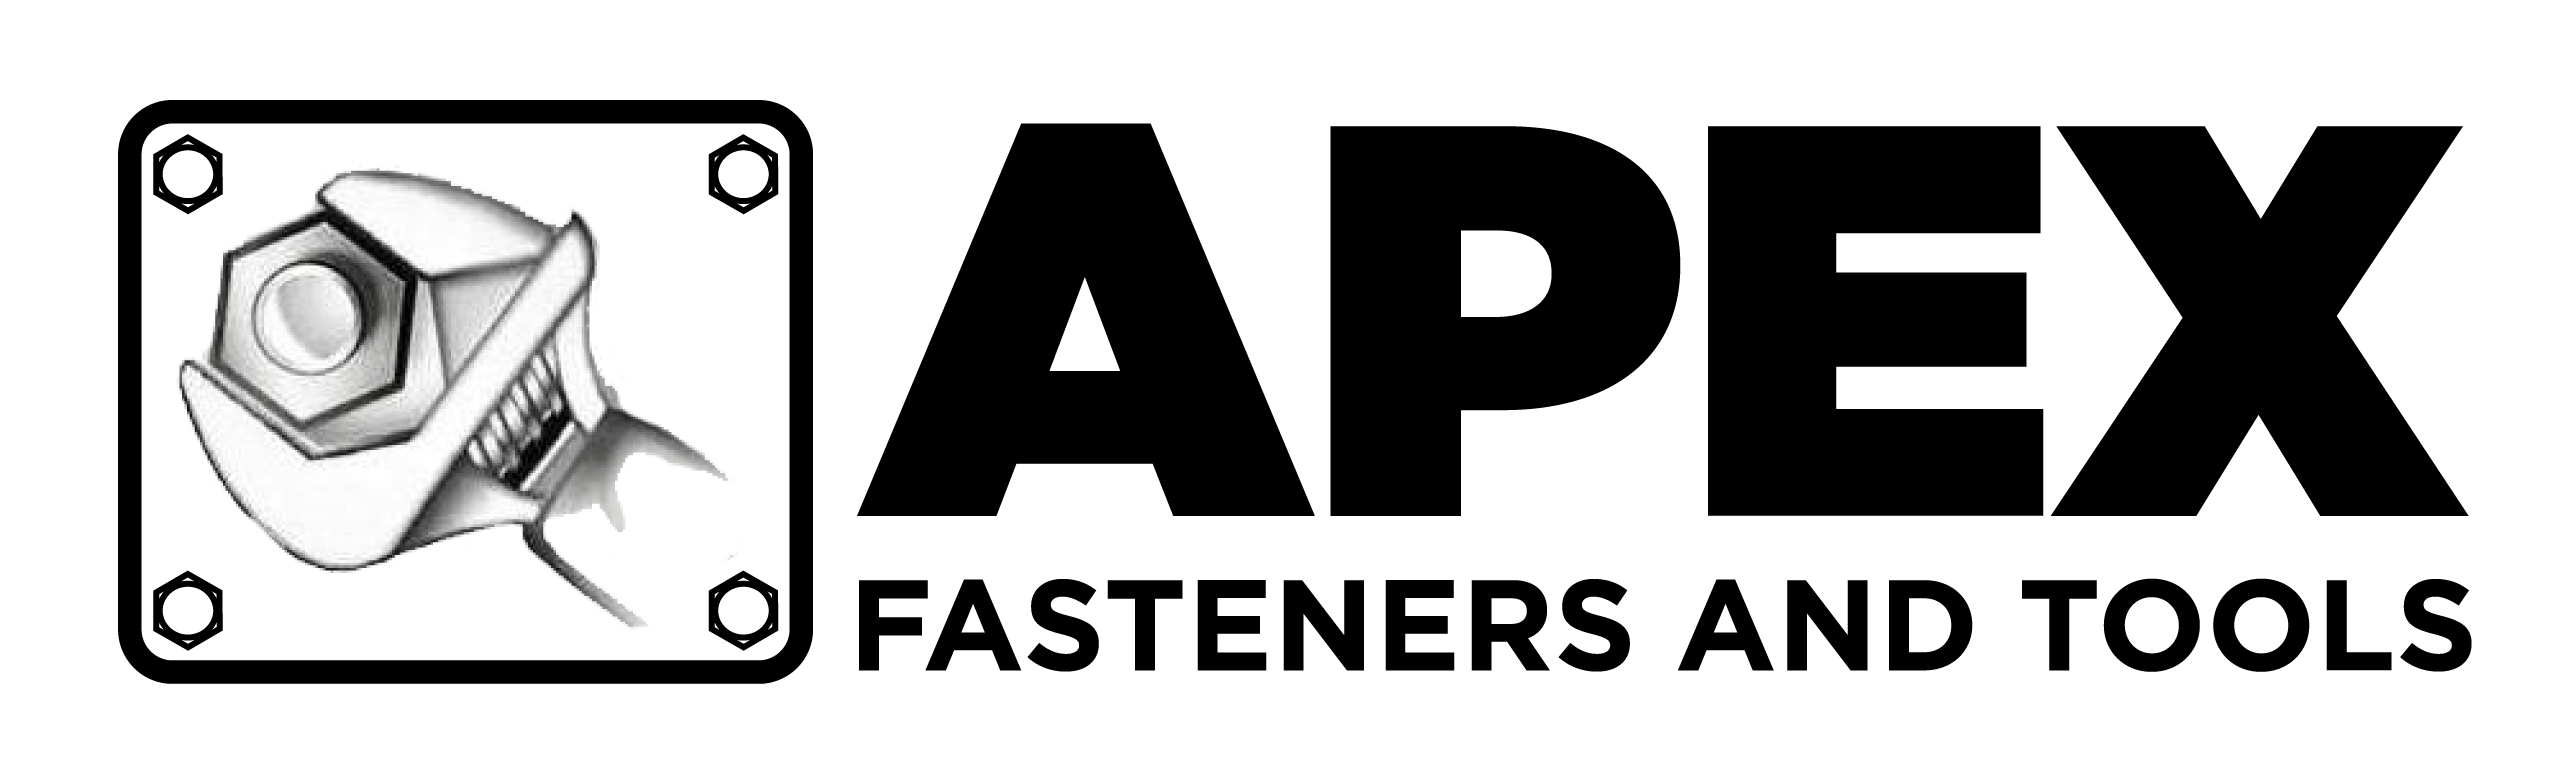 Apex website logo-01